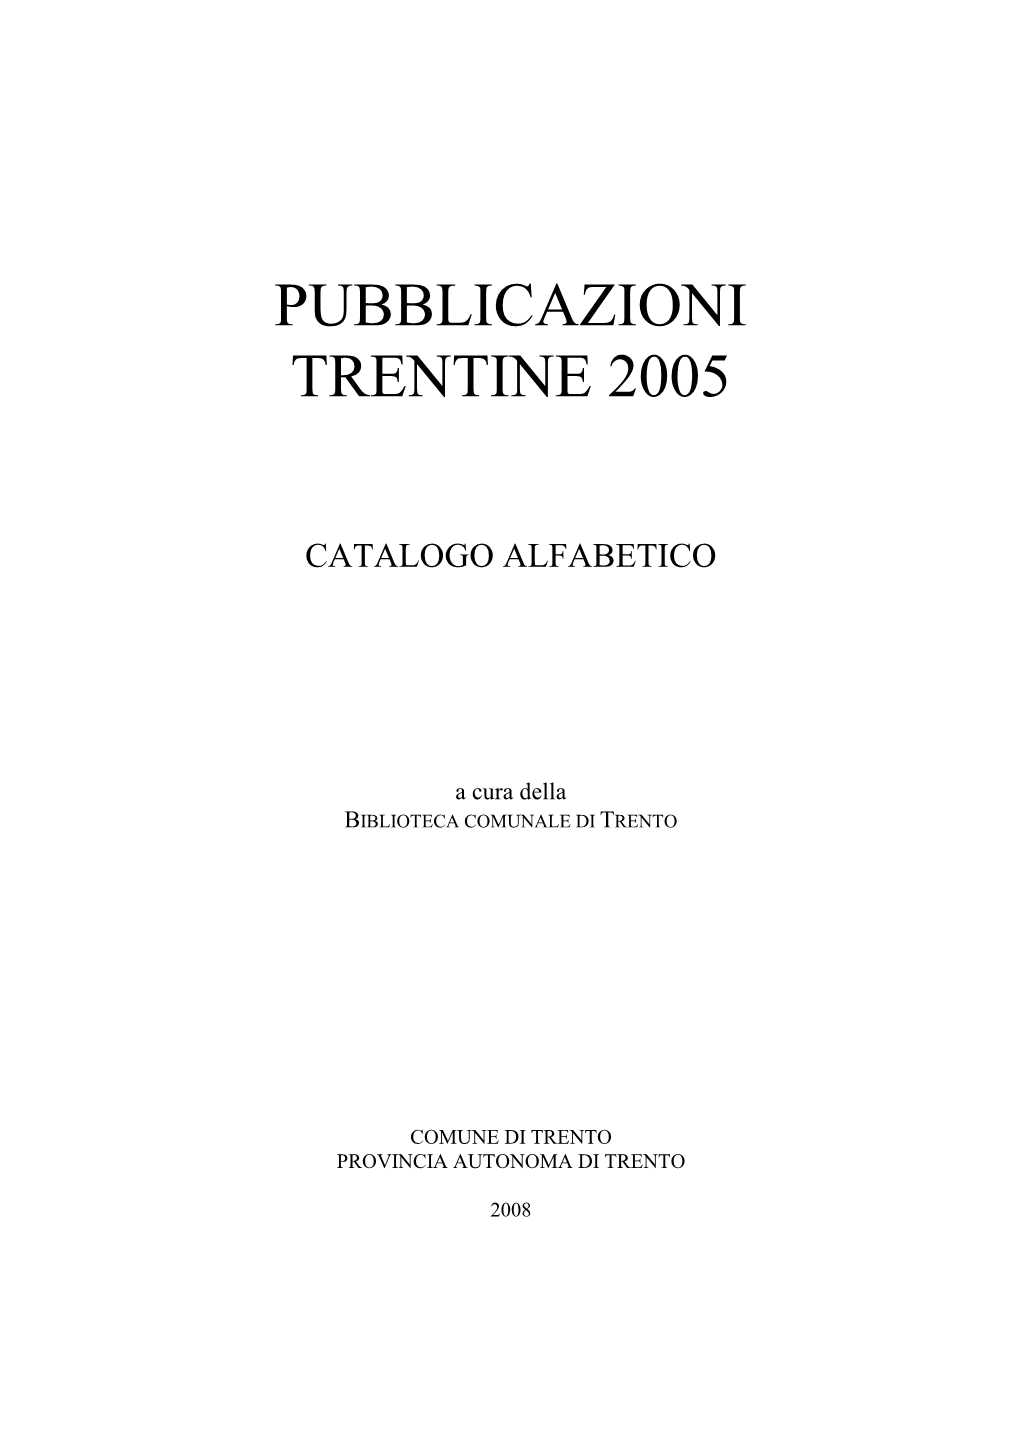 Pubblicazioni Trentine 2005